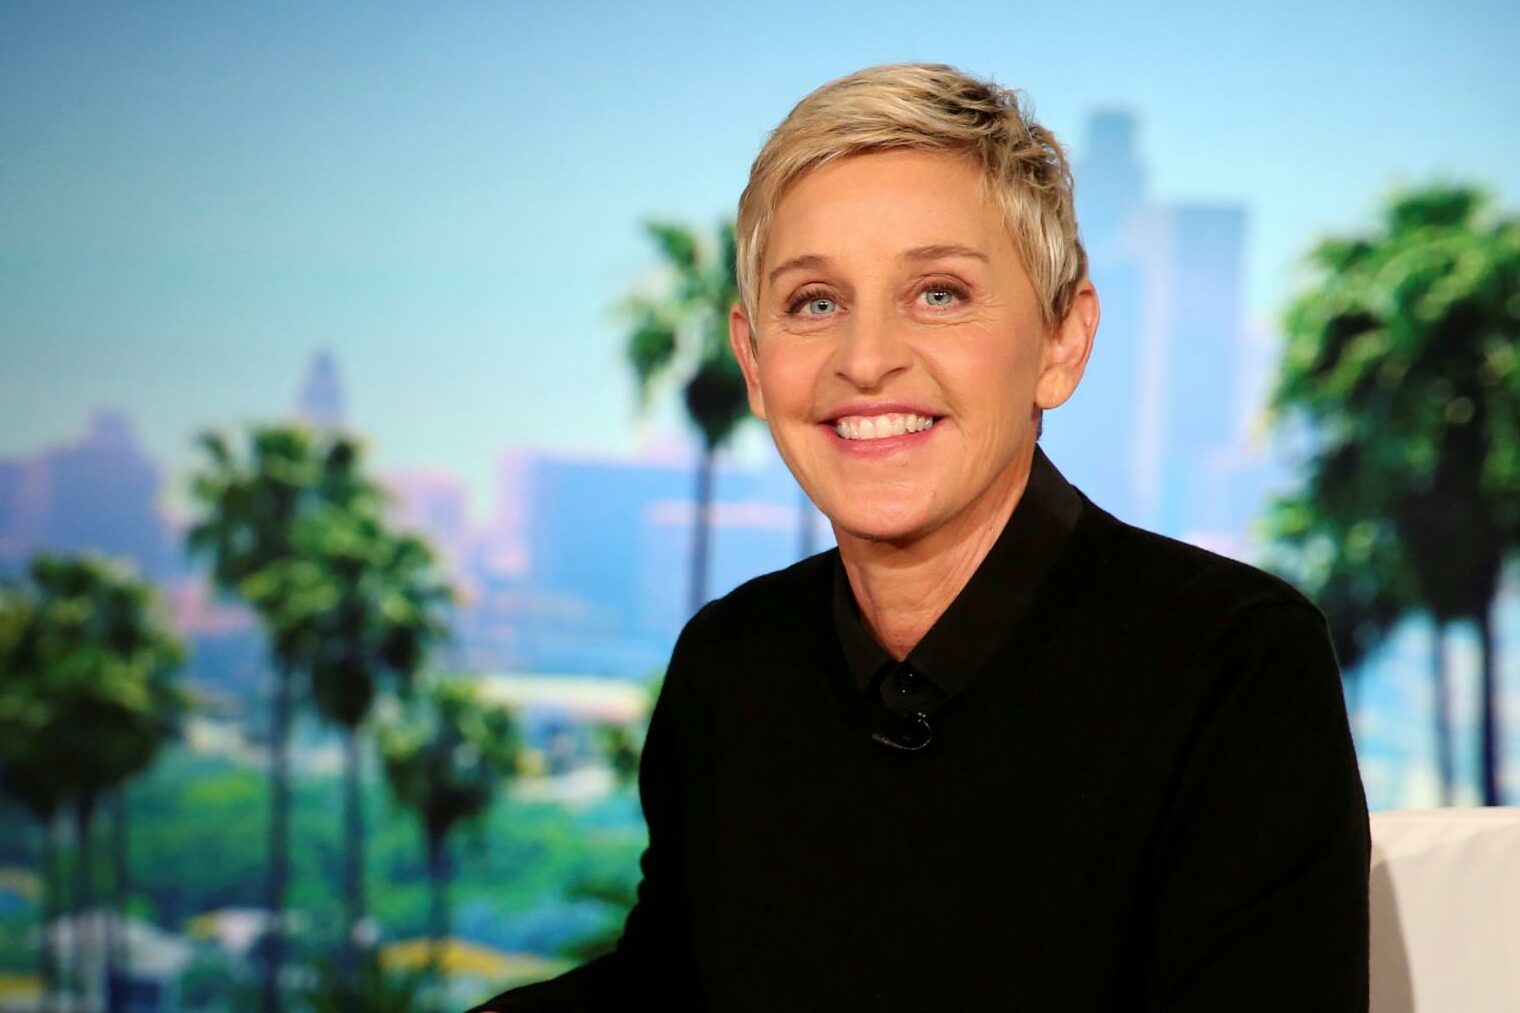 Real reason behind Ellen DeGeneres quitting her talk show revealed!